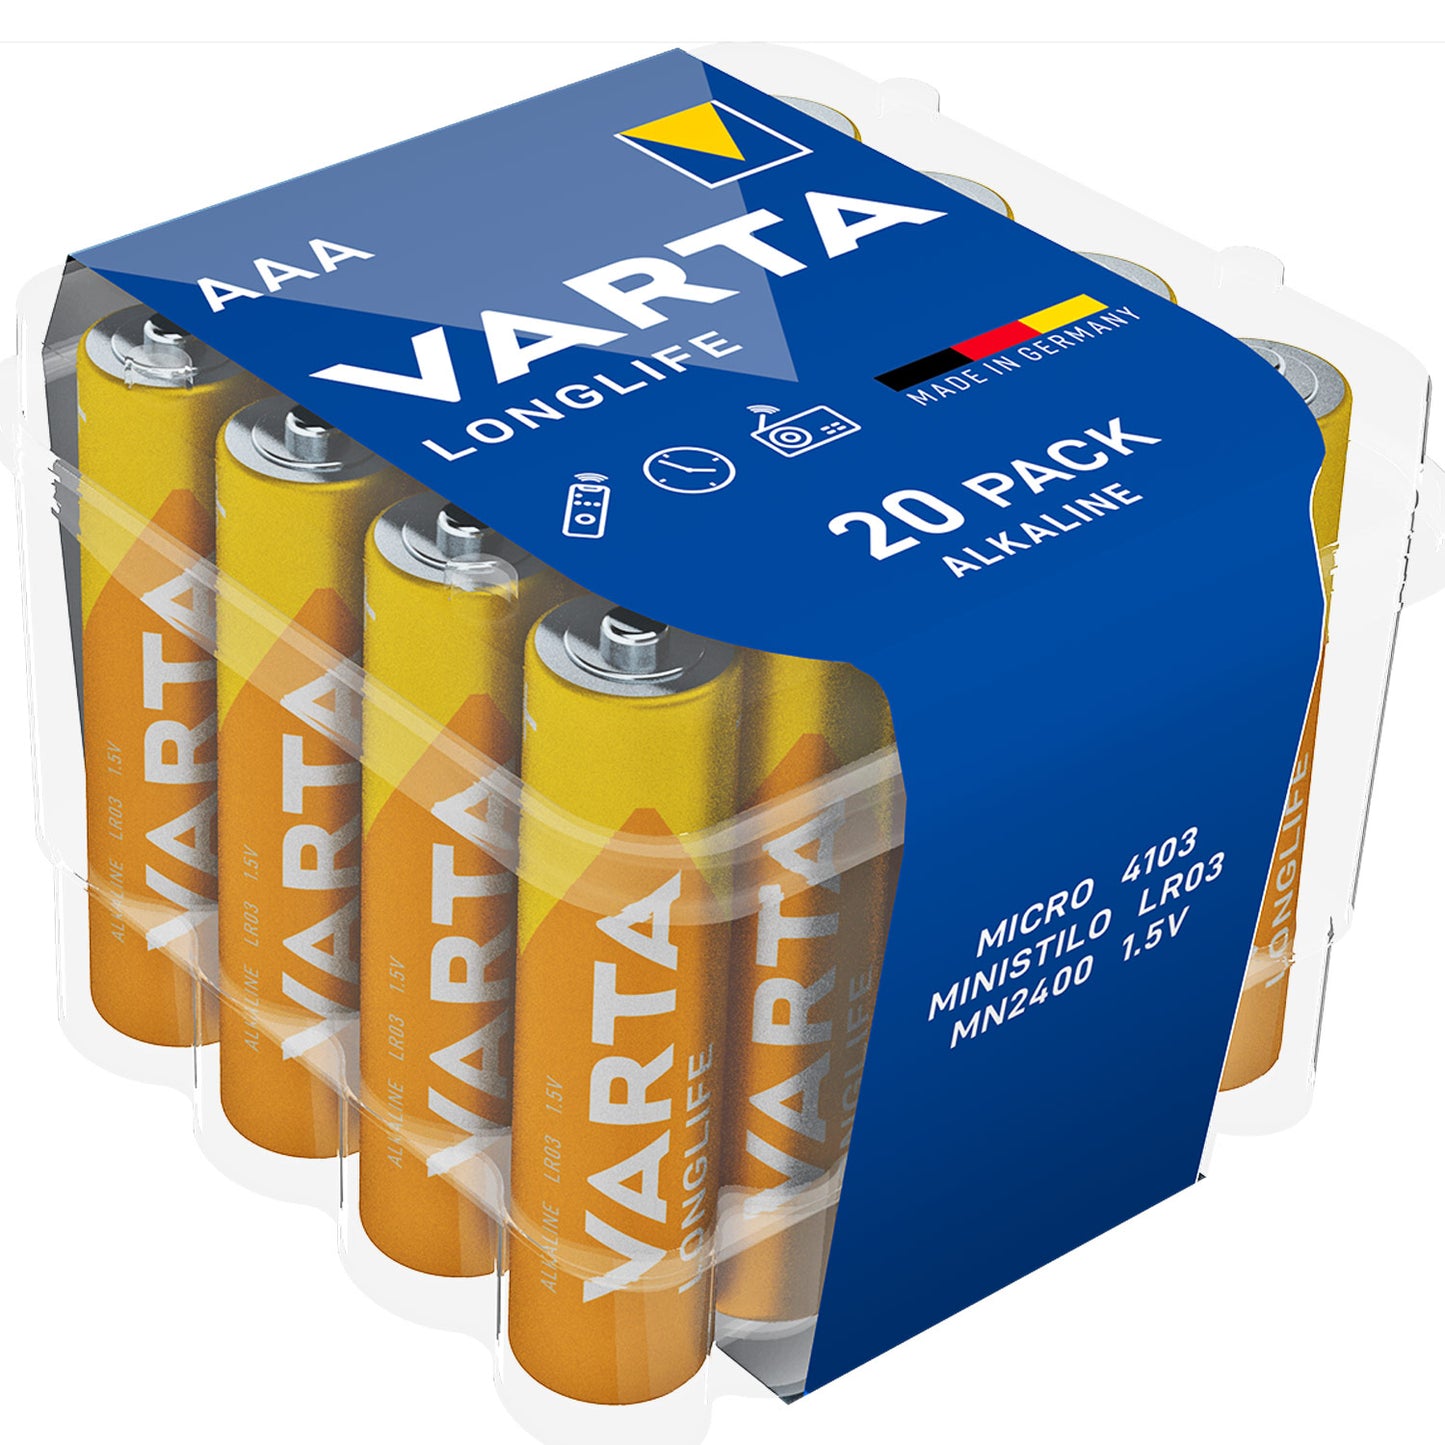 Longlife AAA / LR03 Batteri 20-pack